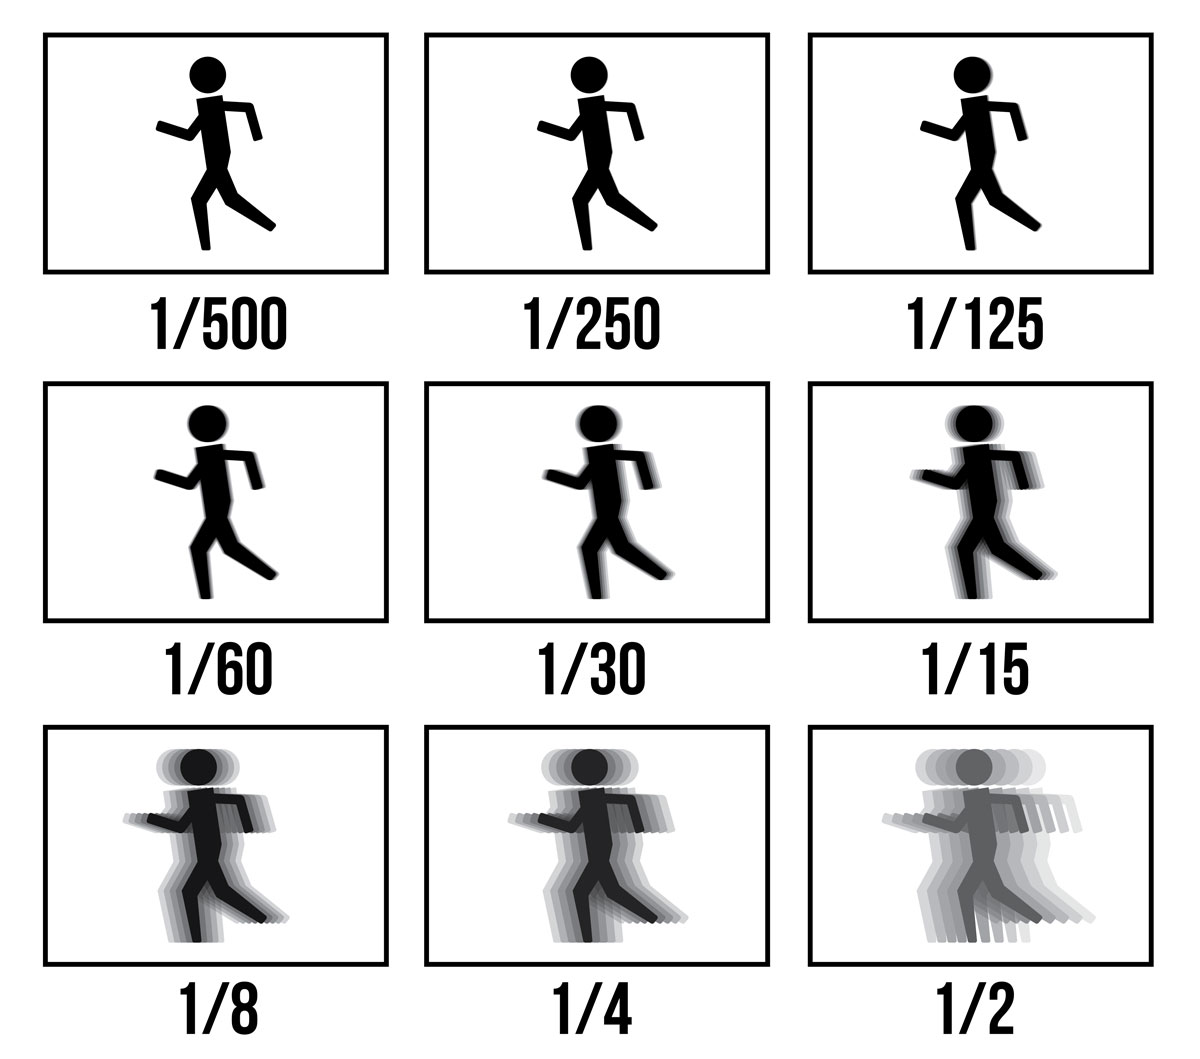 motion blur comparison at different speeds